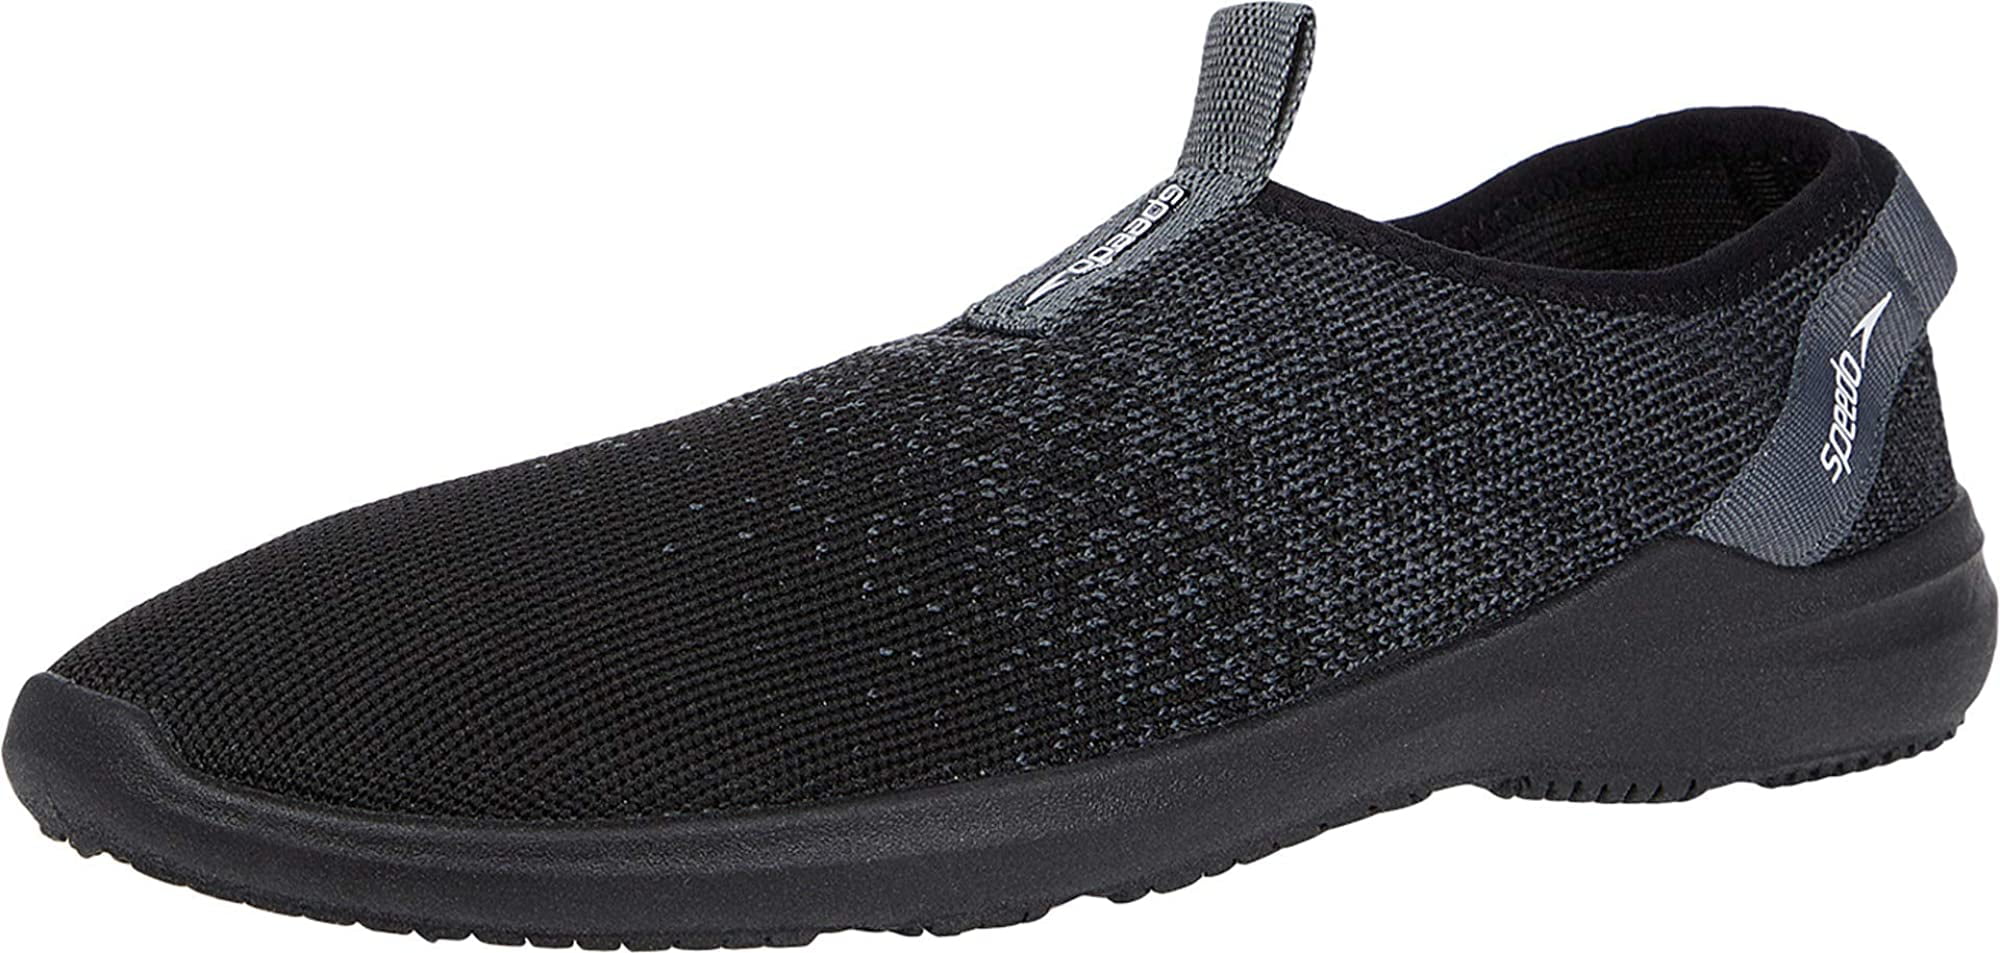 Black Size 12 Speedo Men's Surf Knit Athletic Water Shoe 